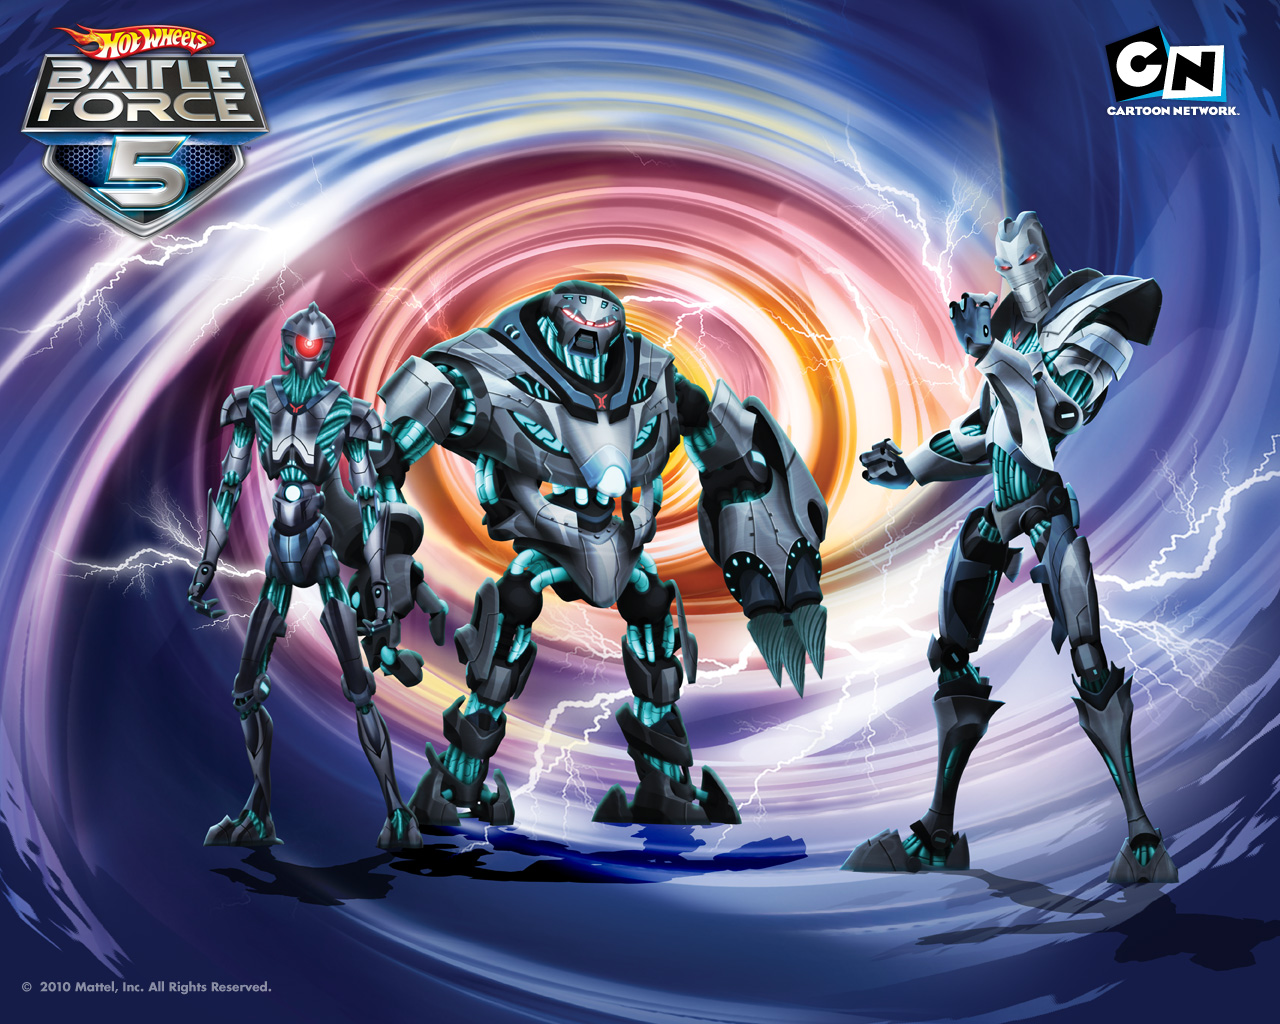 Image - Battle-force-5-cartoon network 2008.jpg - Hot Wheels Battle